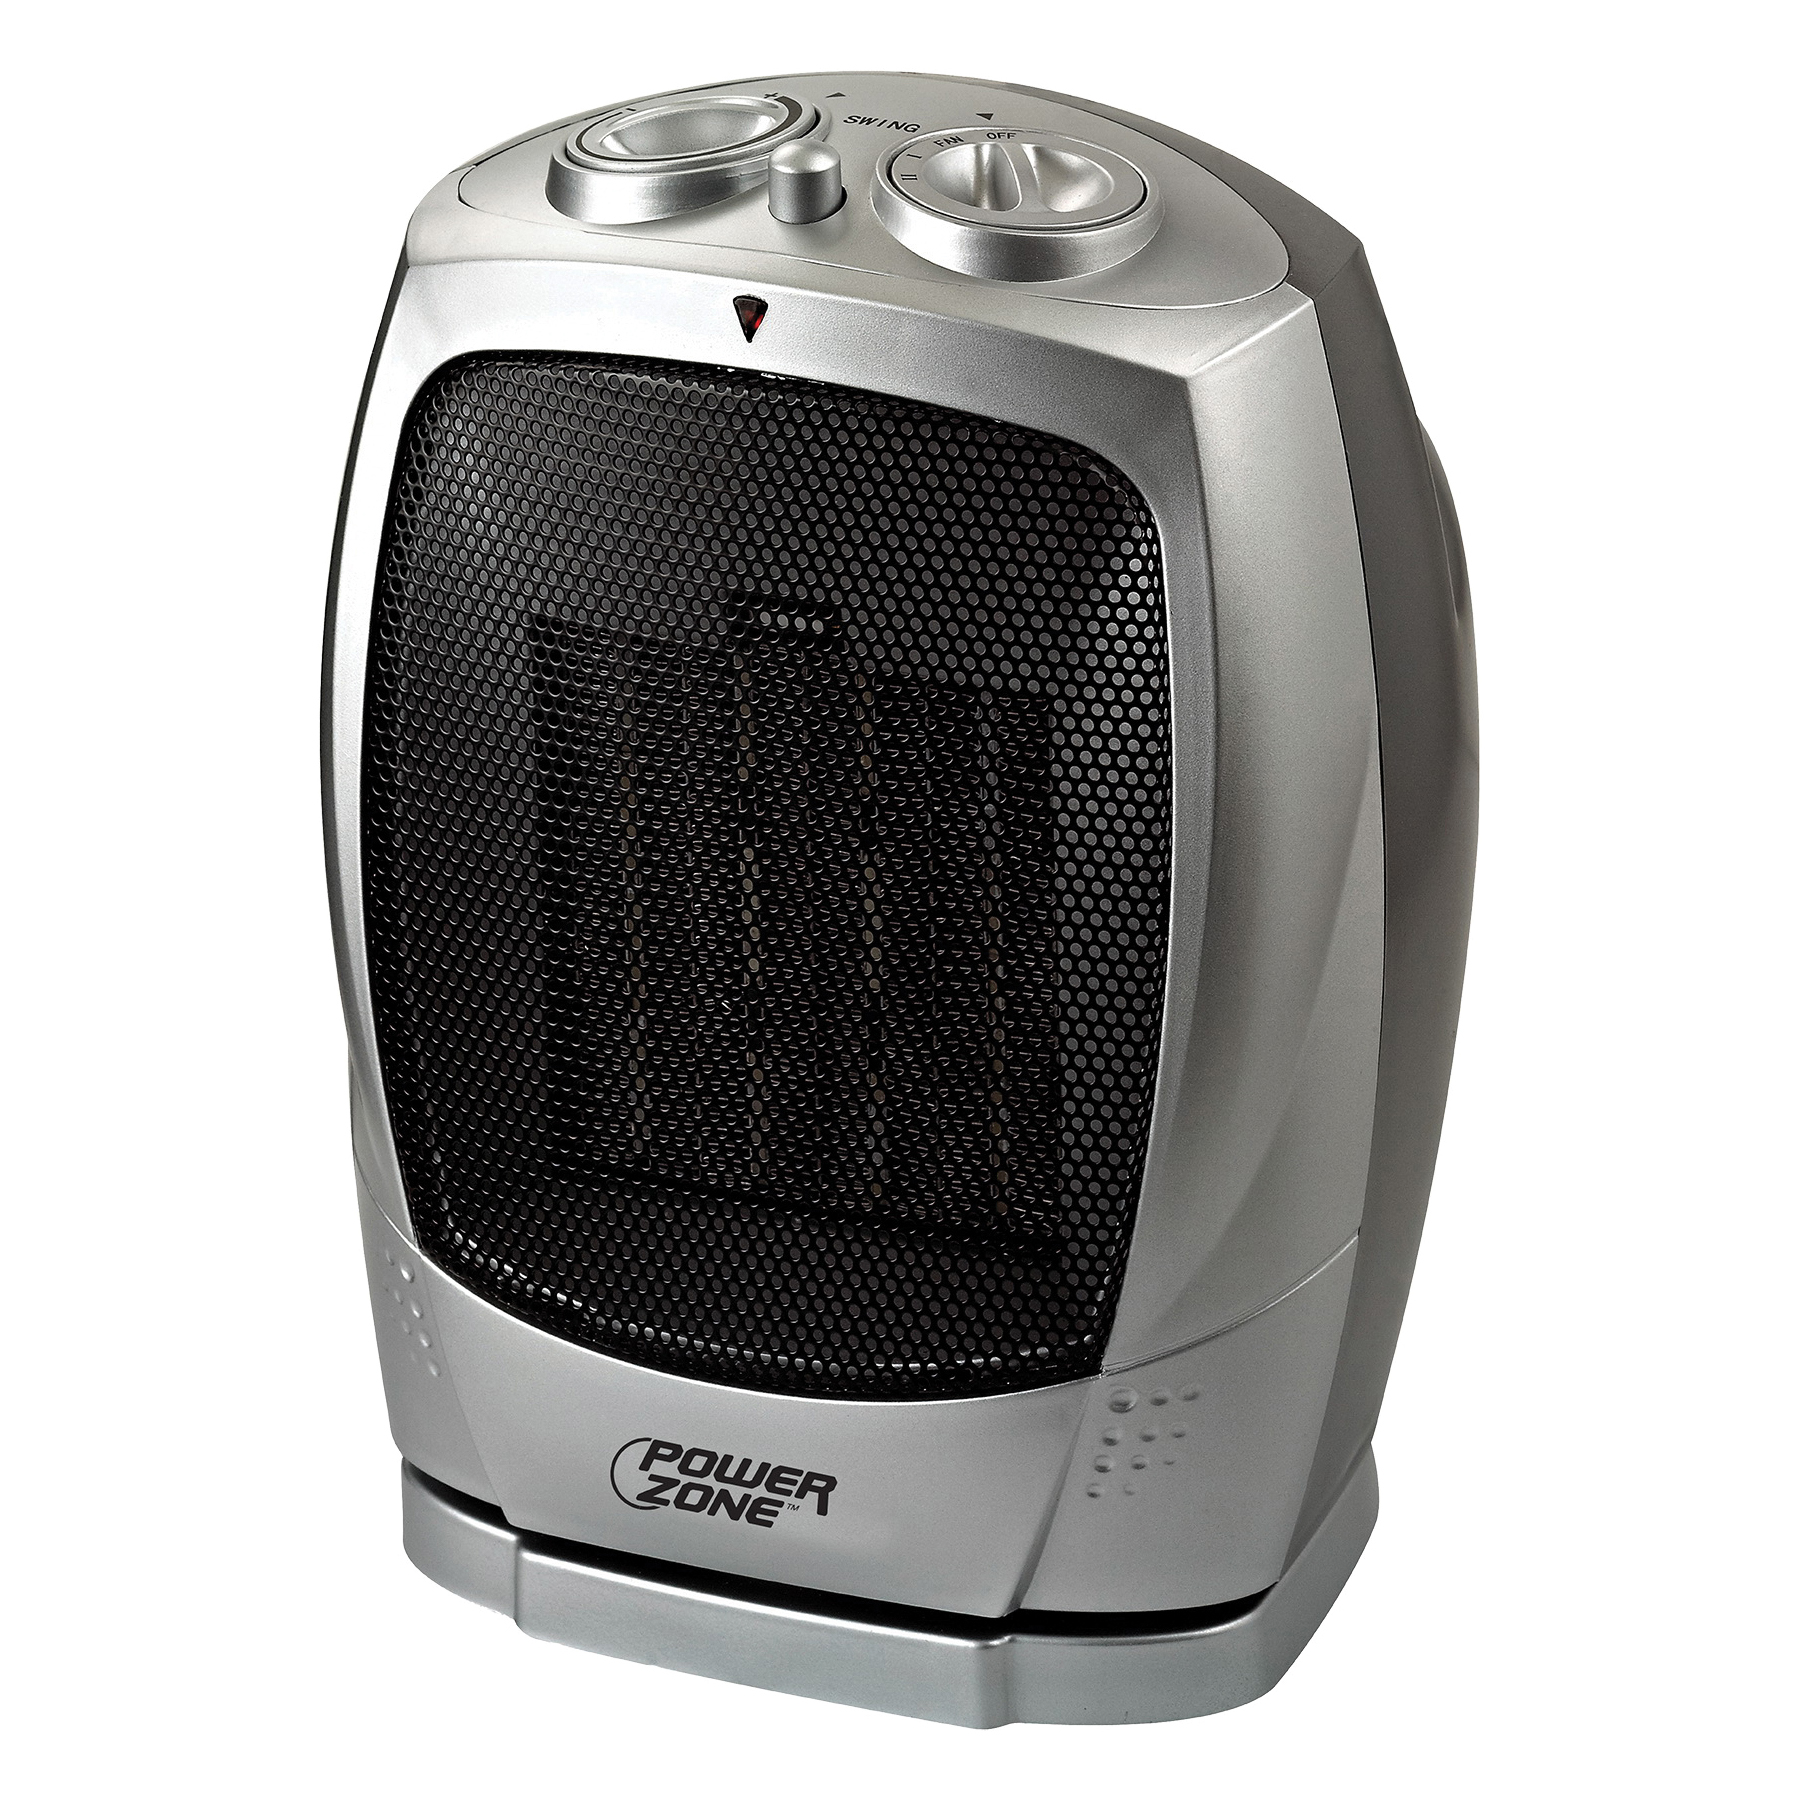 Ceramic OSC Heater 120V, 12.5 A, 120 V, 750/1500 W, 1500W Heating, 2-Heat Settings, Grey